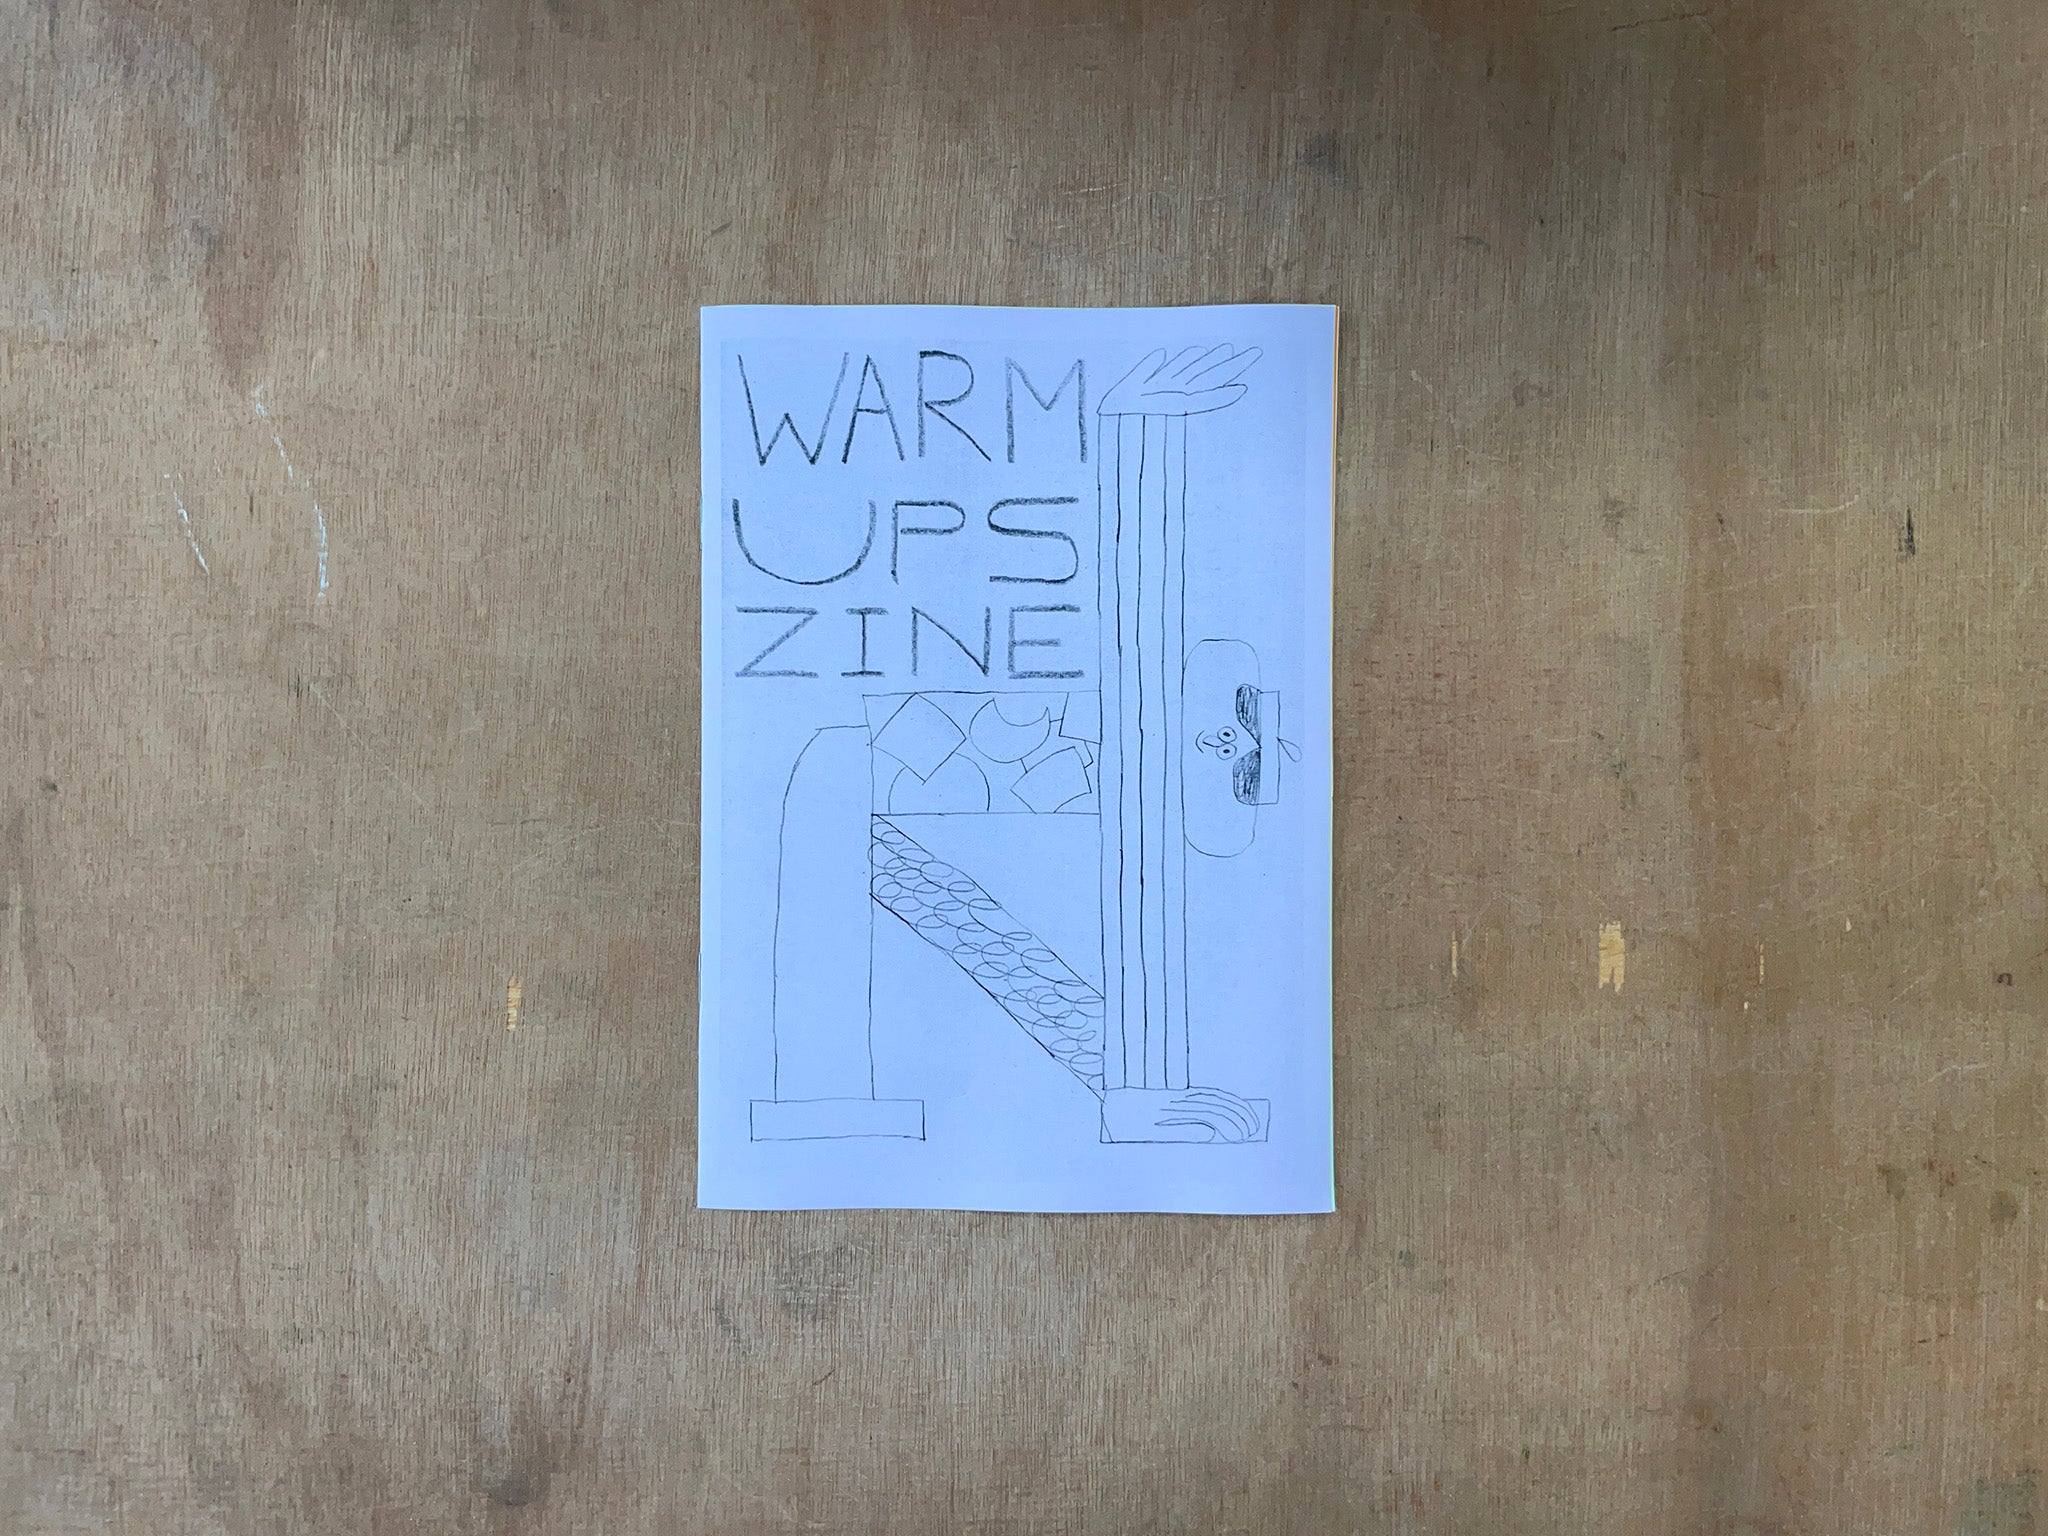 WARM UPS ZINE by Ed Cheverton